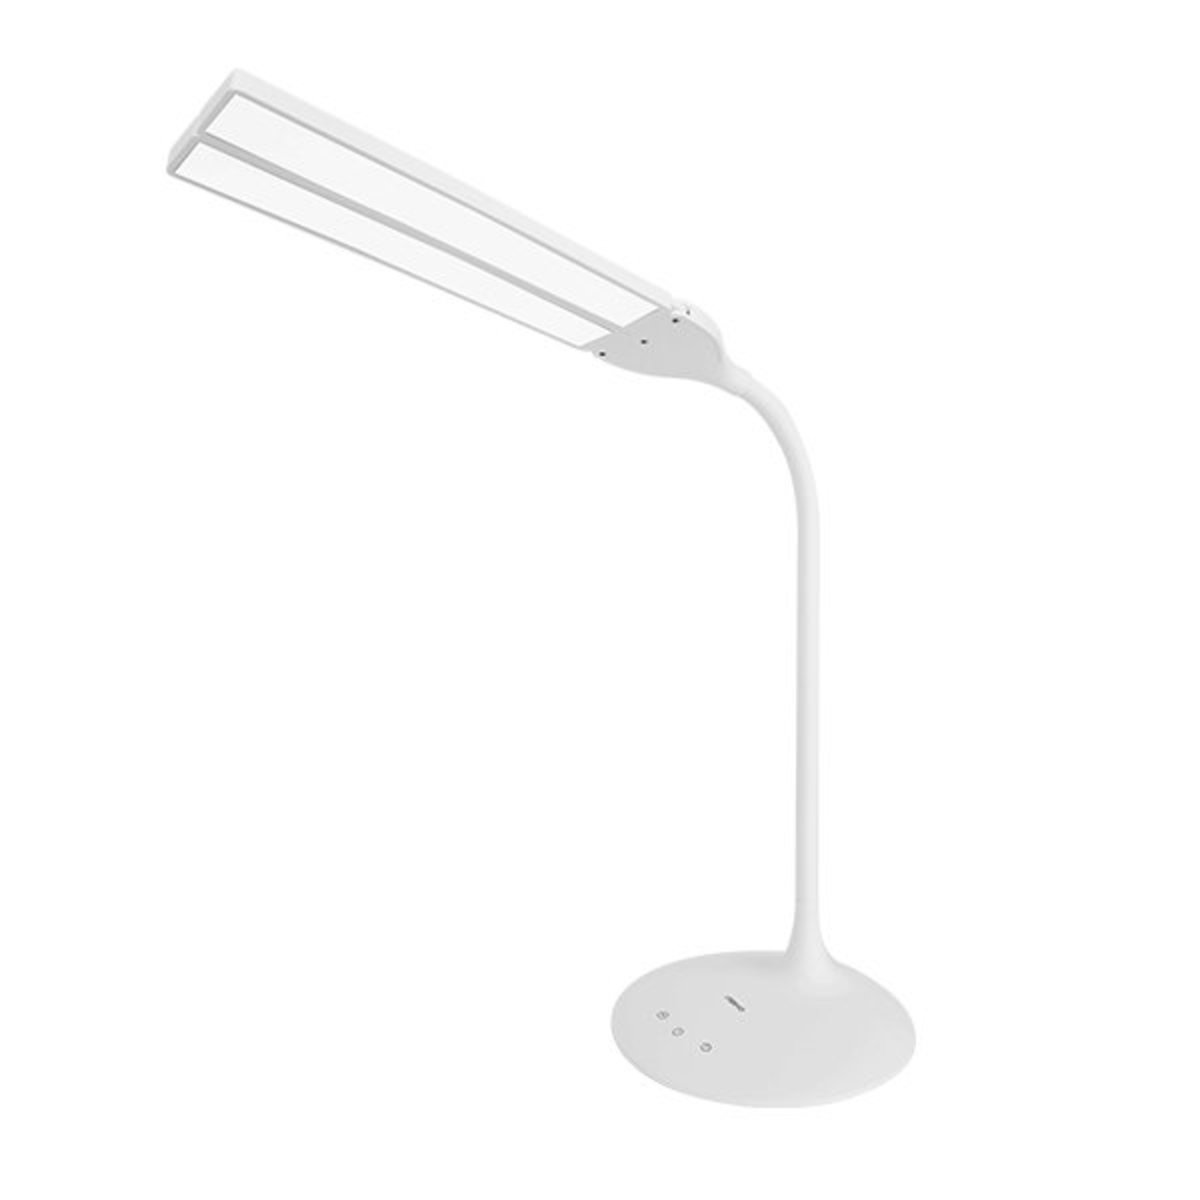 ABKO LS01 韓國 LED DESK LAMP Adjustable LED 檯燈 可調角度 / 時尚 / 節能 / 輕觸按鍵 / 3色調